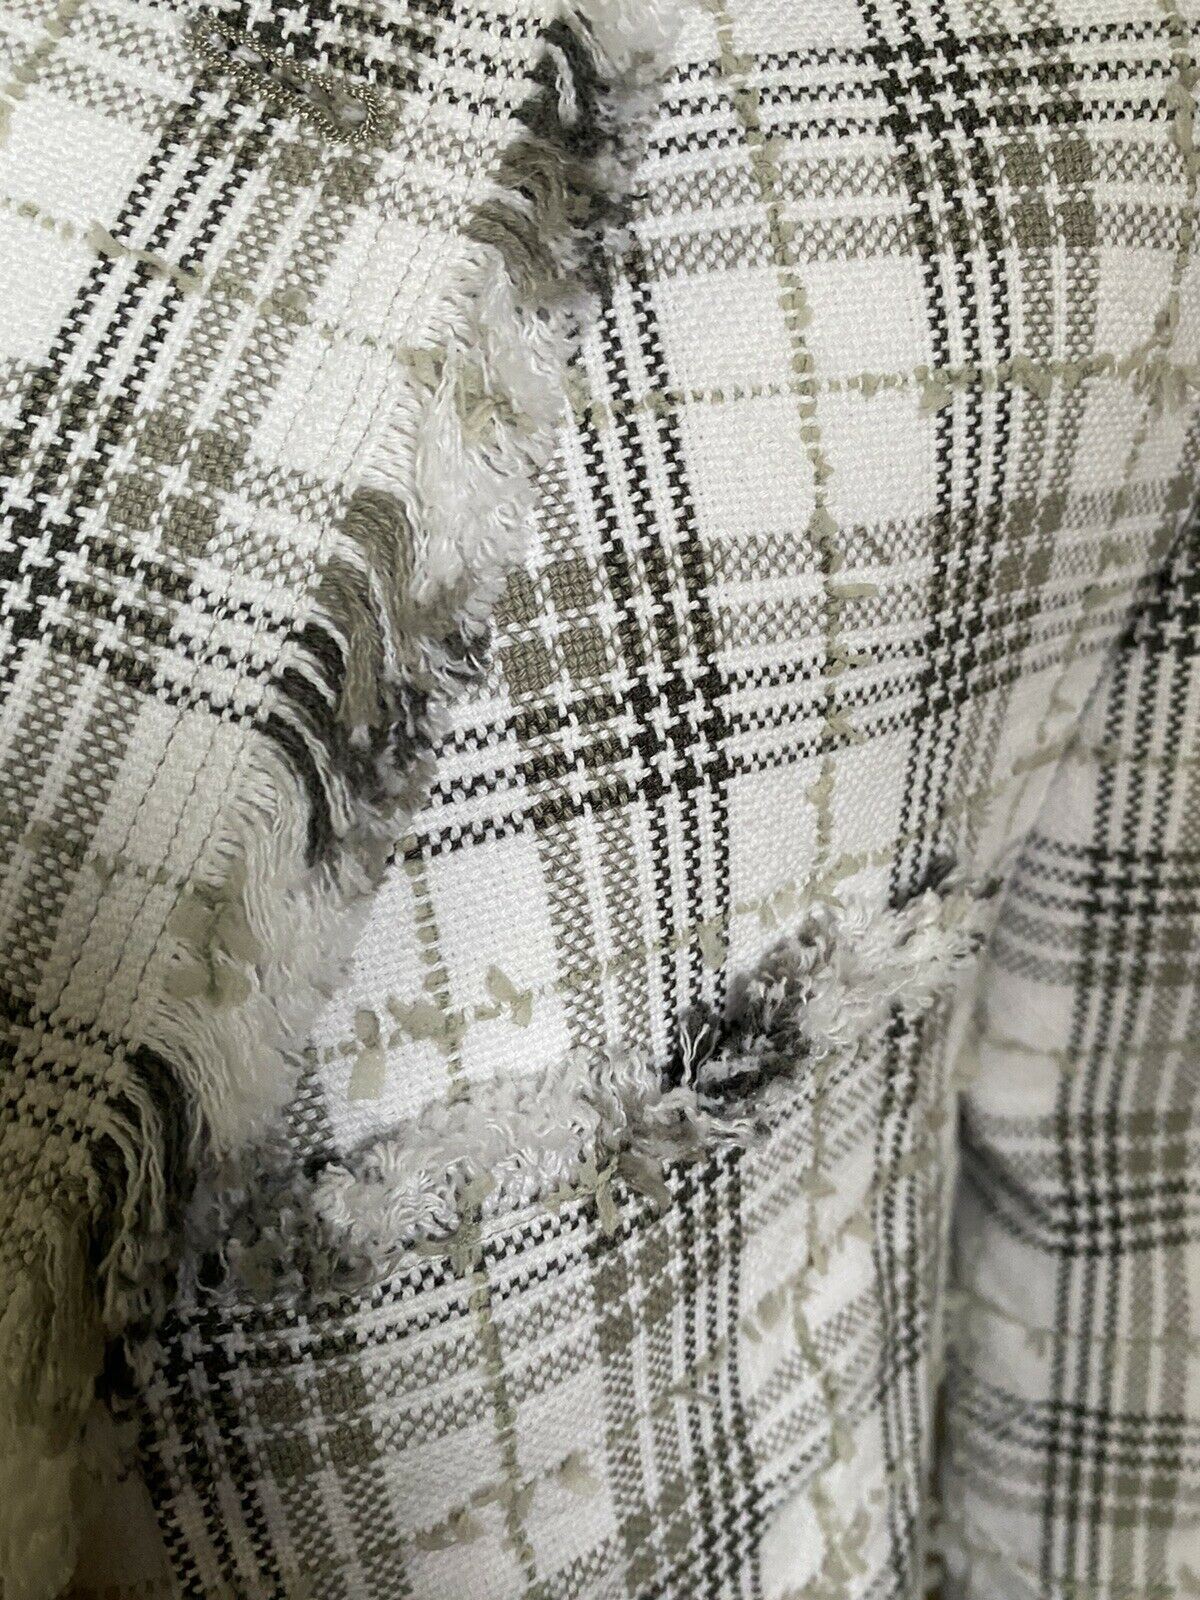 NWT $2490 Thom Browne Men Seersucker Tweed Jacket Blazer Black/White Size 3/L